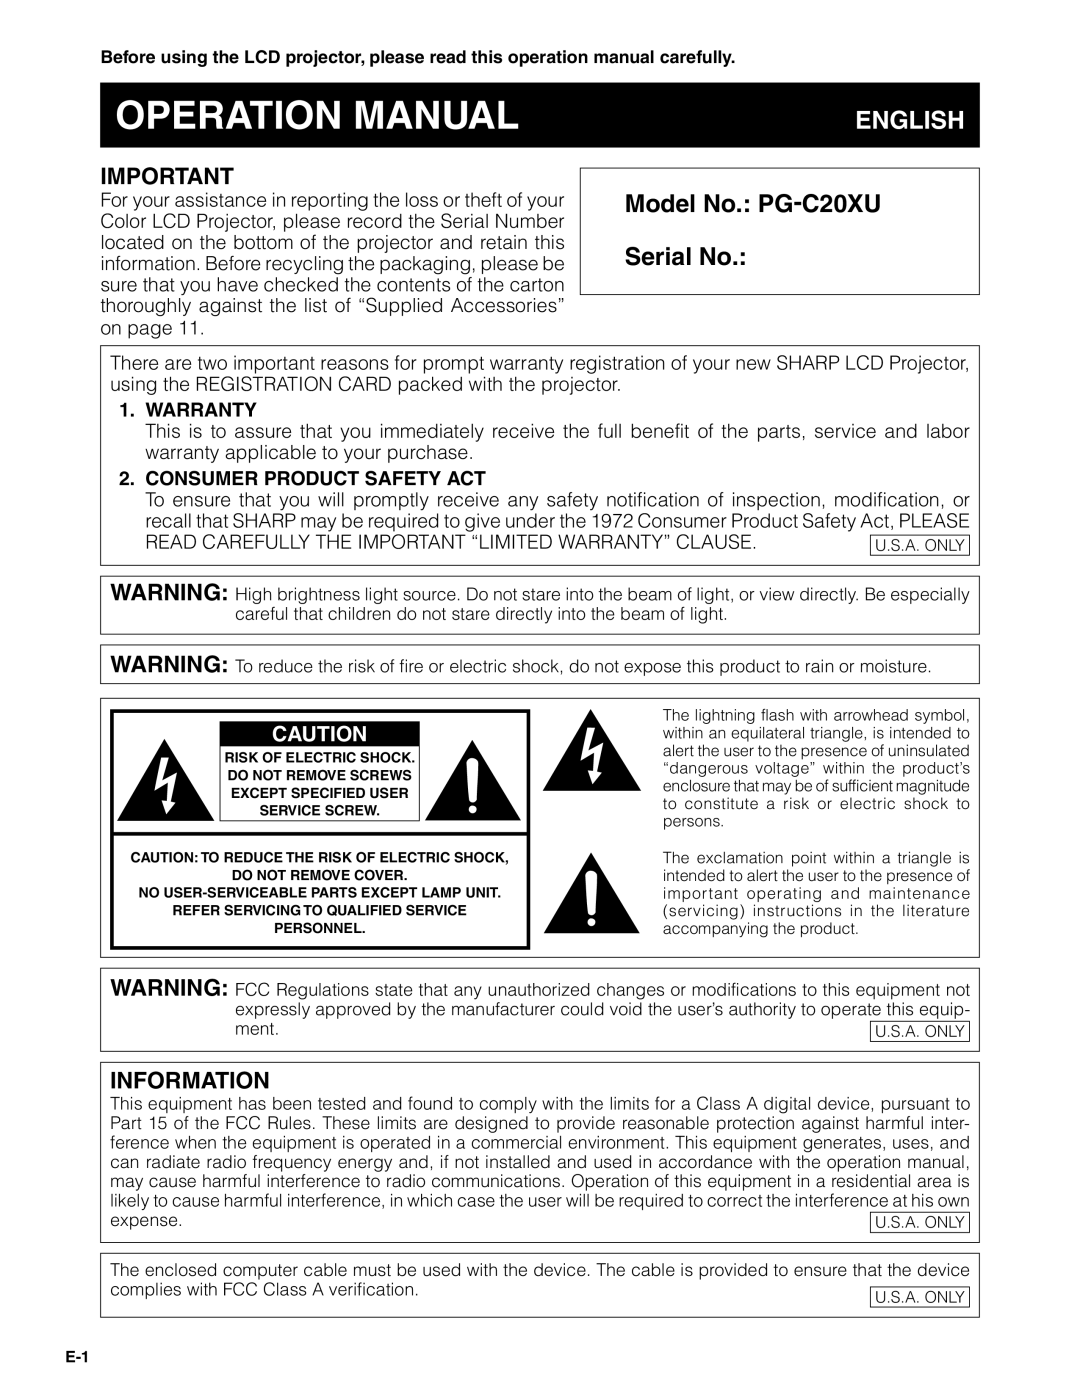 Sharp Model No. PG-C20XU Serial No, Information, Warranty, Consumer Product Safety Act, Operation Manual, English 